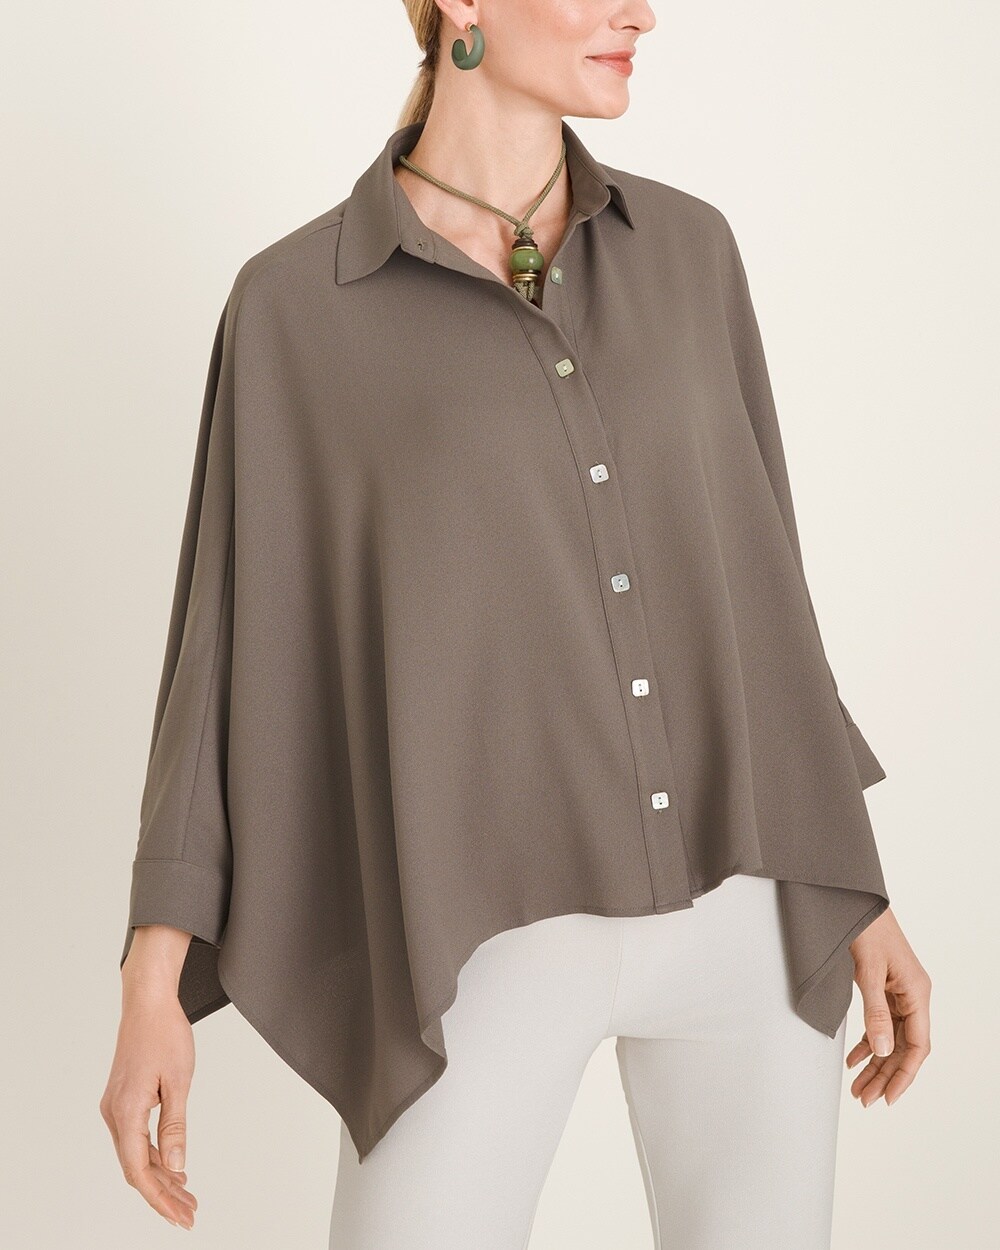 Marla Wynne for Chico's Crepe Dolman-Sleeve Shirt